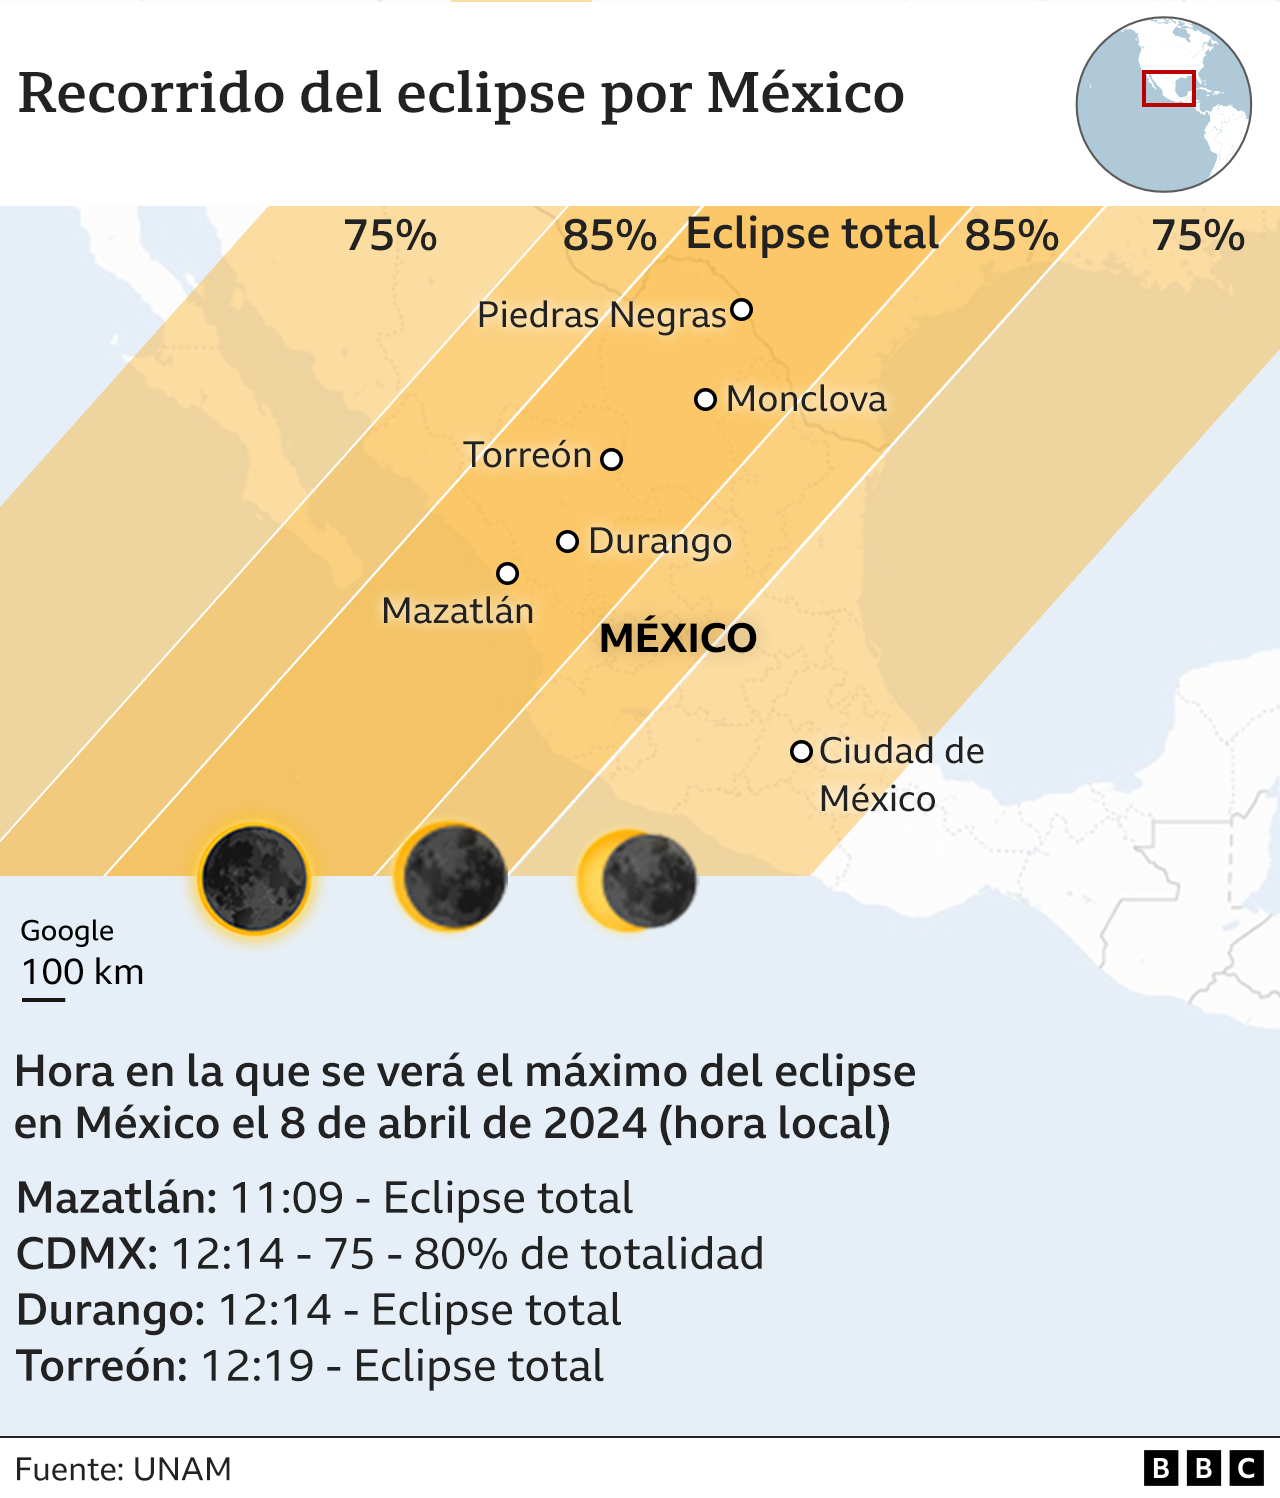 Recorrido del eclipse por México